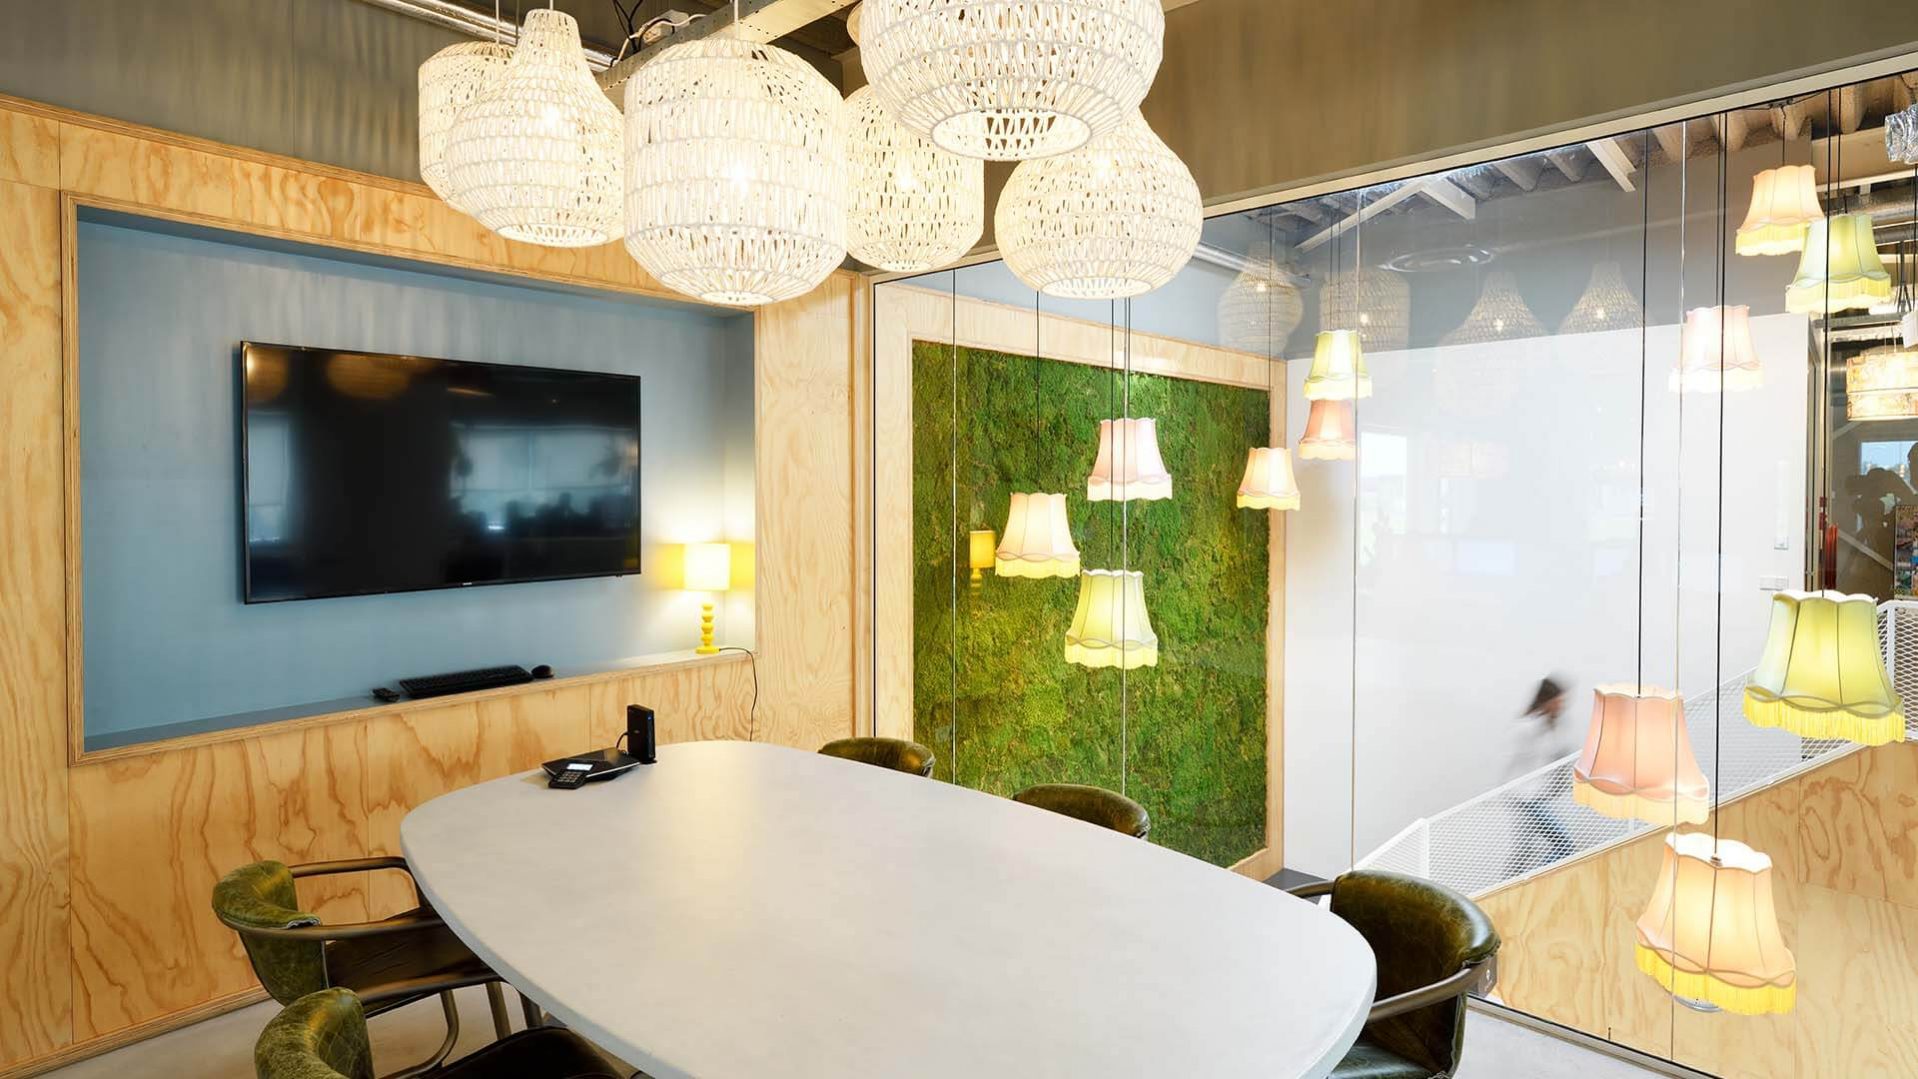 Lamp & Licht, kantoorontwerp, open kantoor, vergaderruimte met glas, groene wand, televisie op de wand, moswand, trappenhuis ontwerp | Burobas